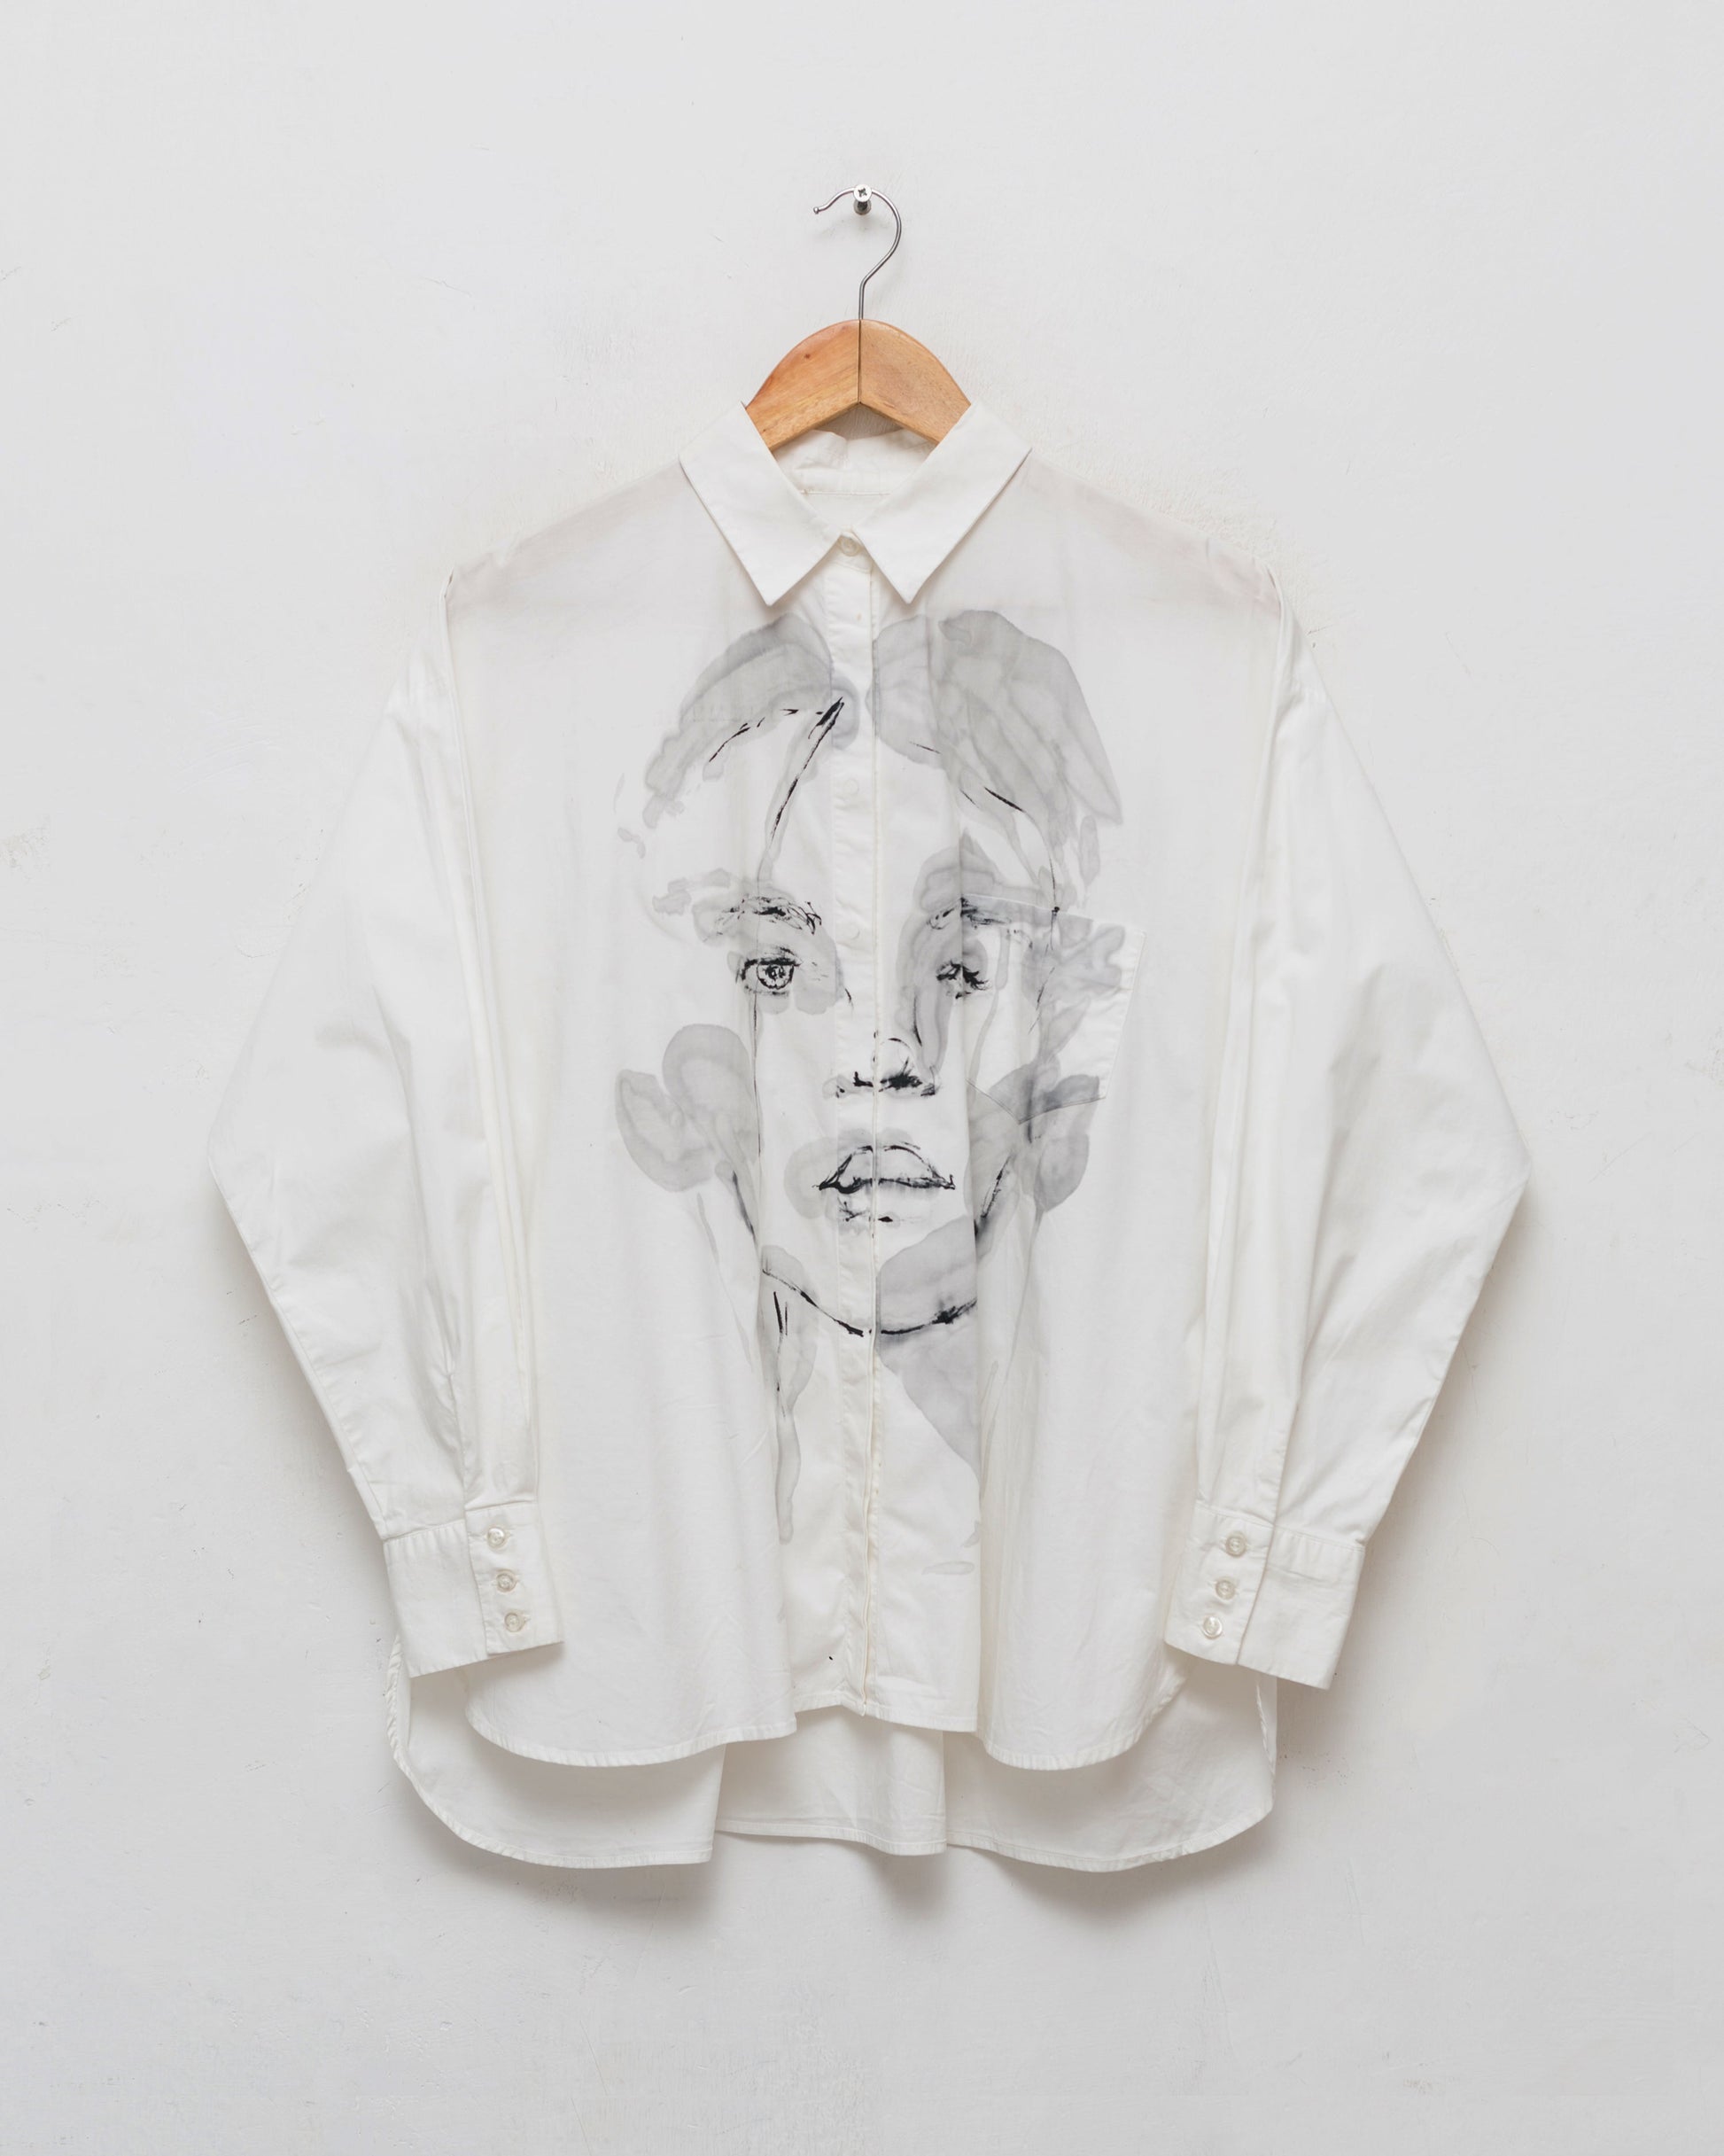 Handpainted portrait shirt //